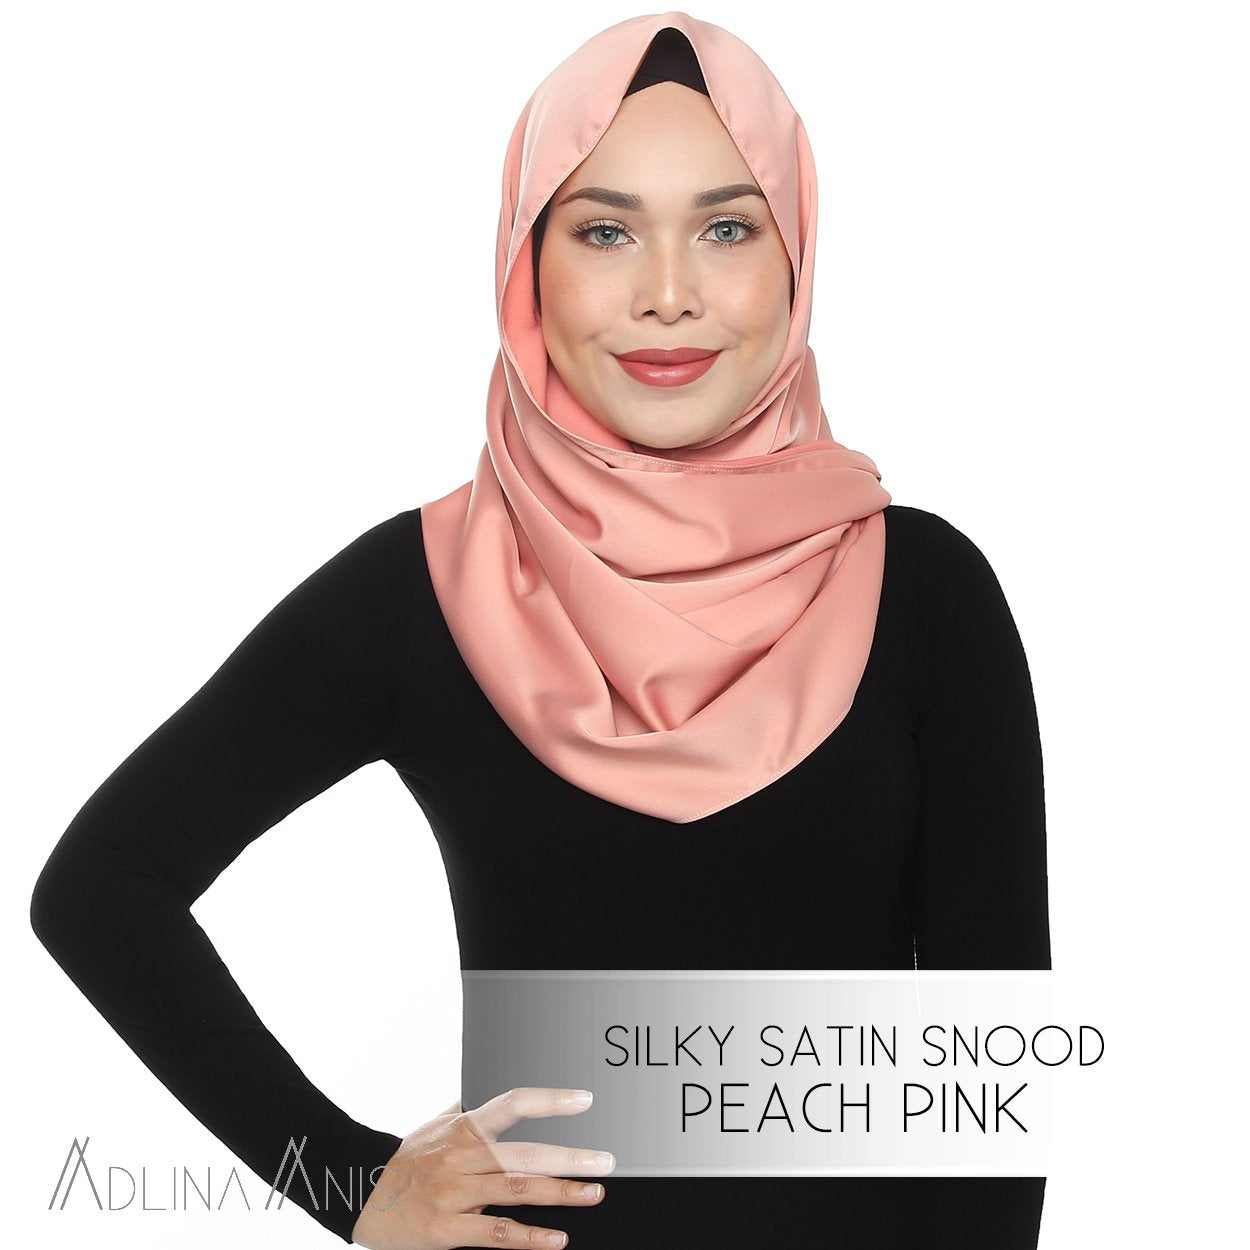 Silky Satin Snood Grande - Peach Pink - Snoods Grande - Adlina Anis - Third Culture Boutique